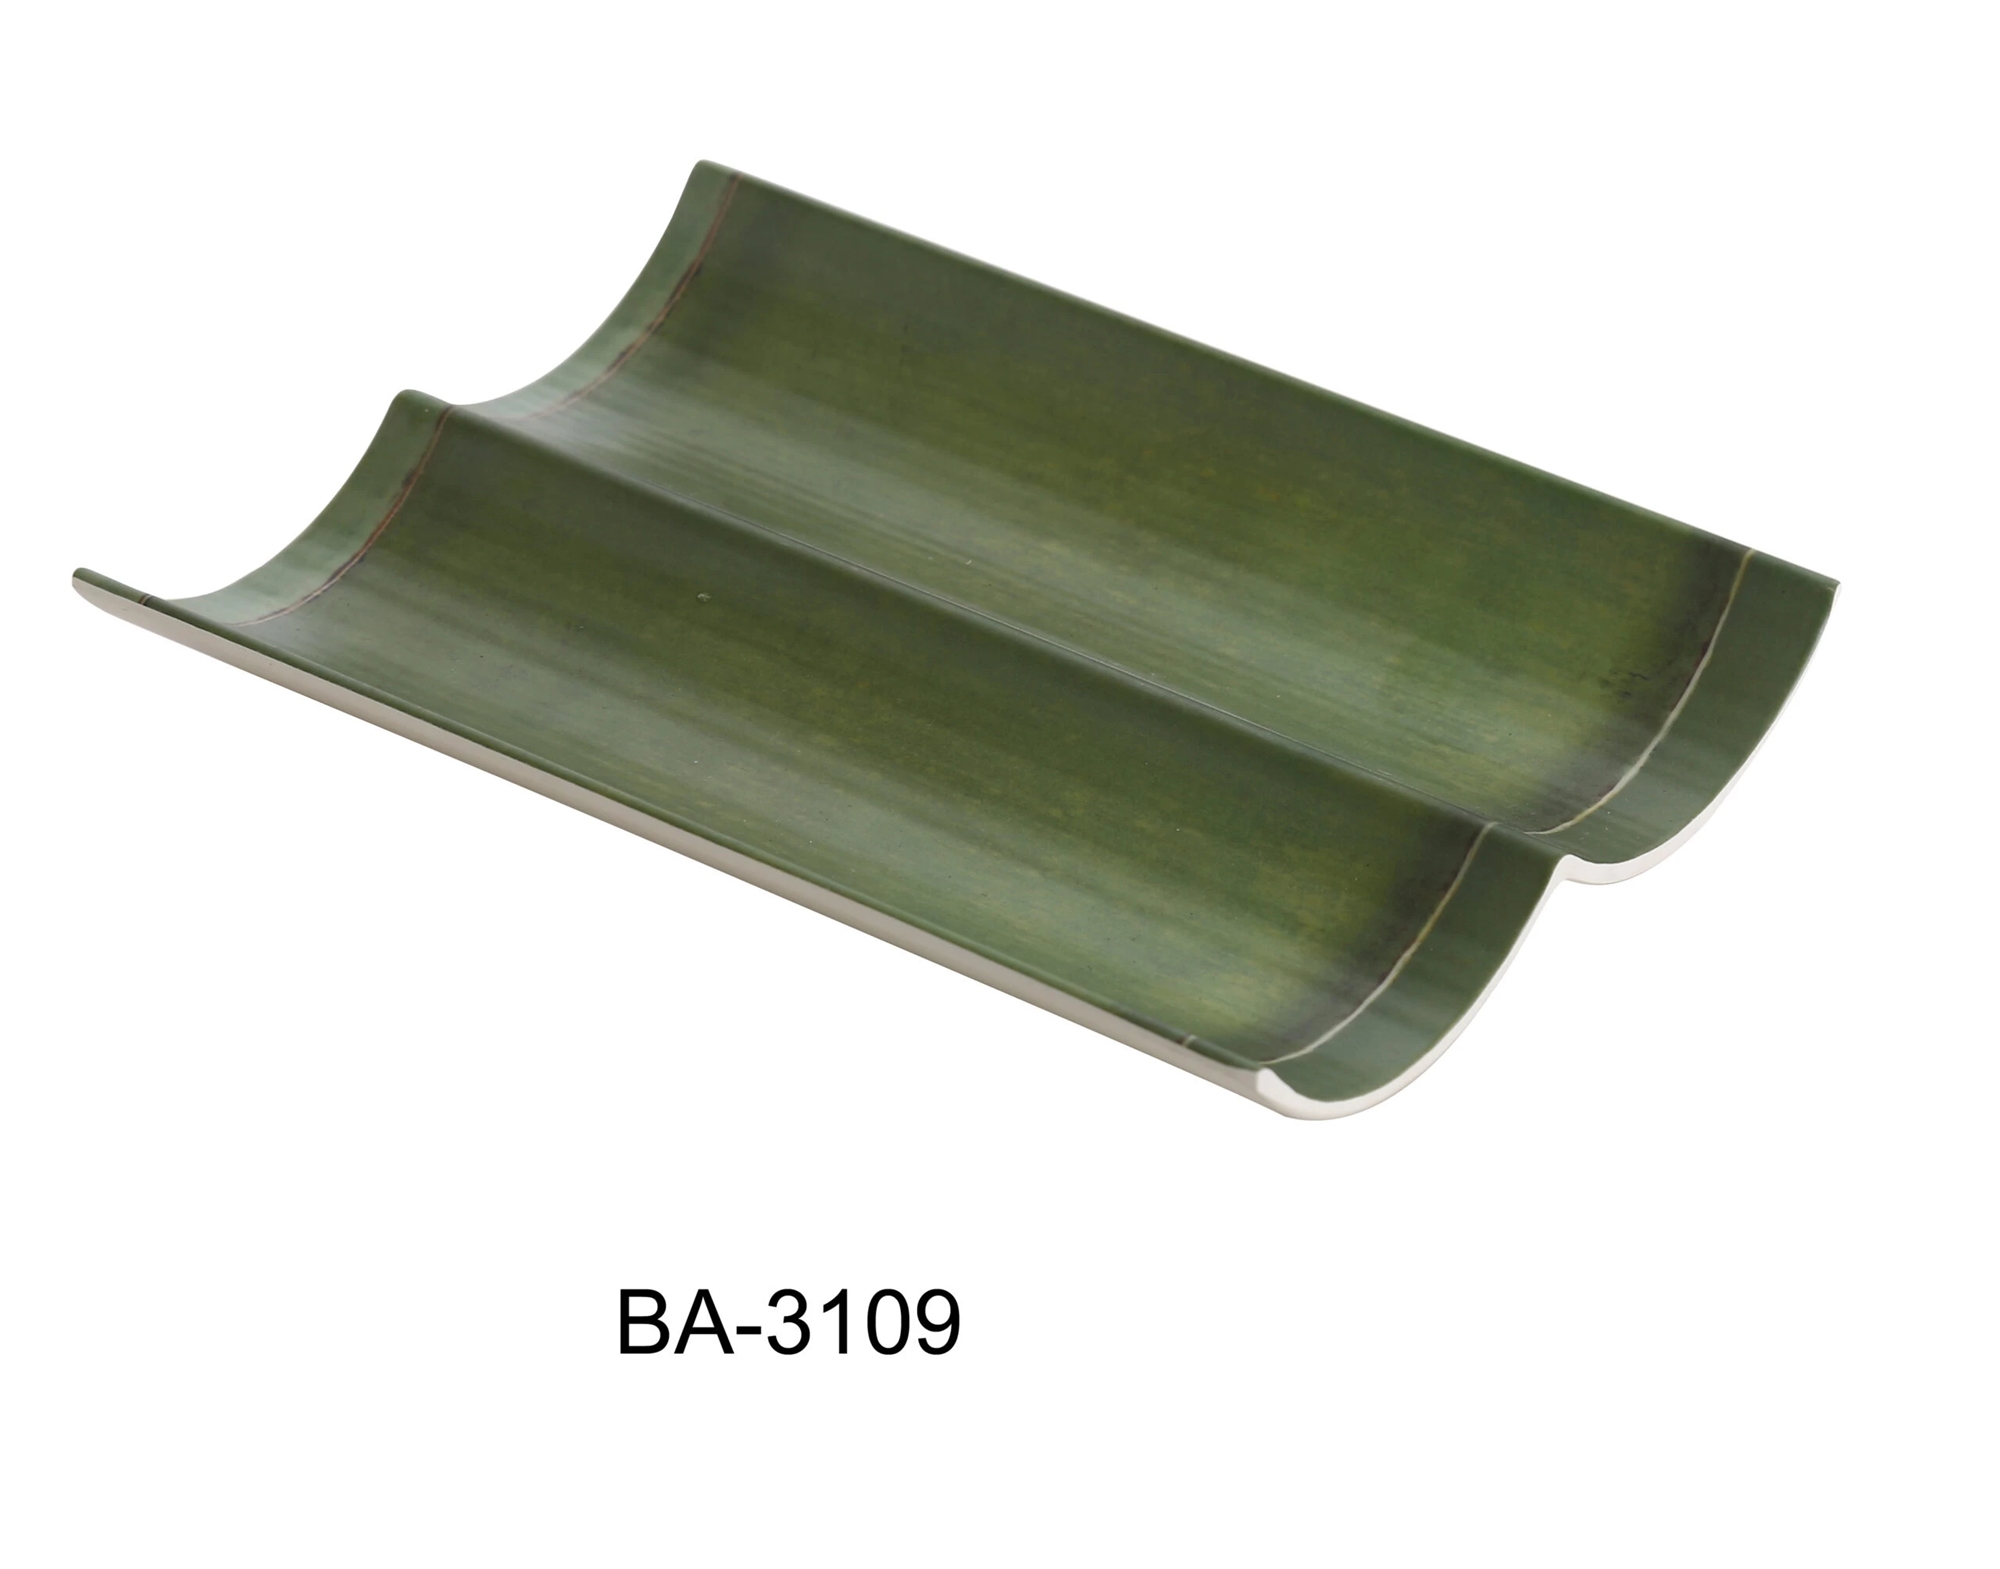 Yanco BA-3109 Bamboo Style 8.5â€³ X 6â€³ Divided Plate